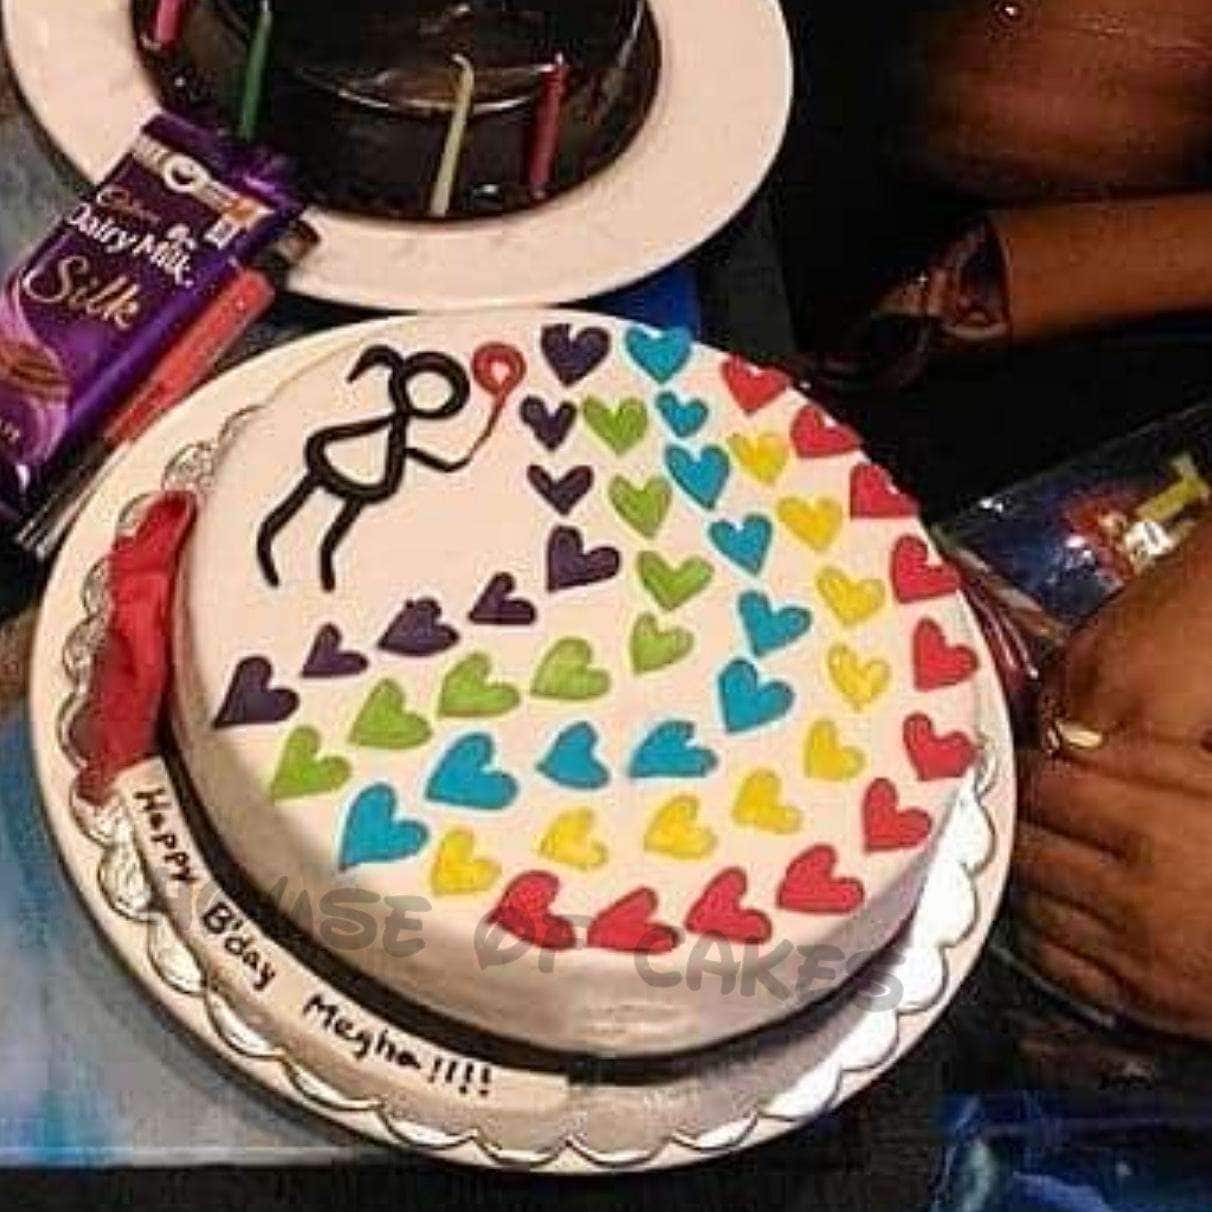 Love Story Cake